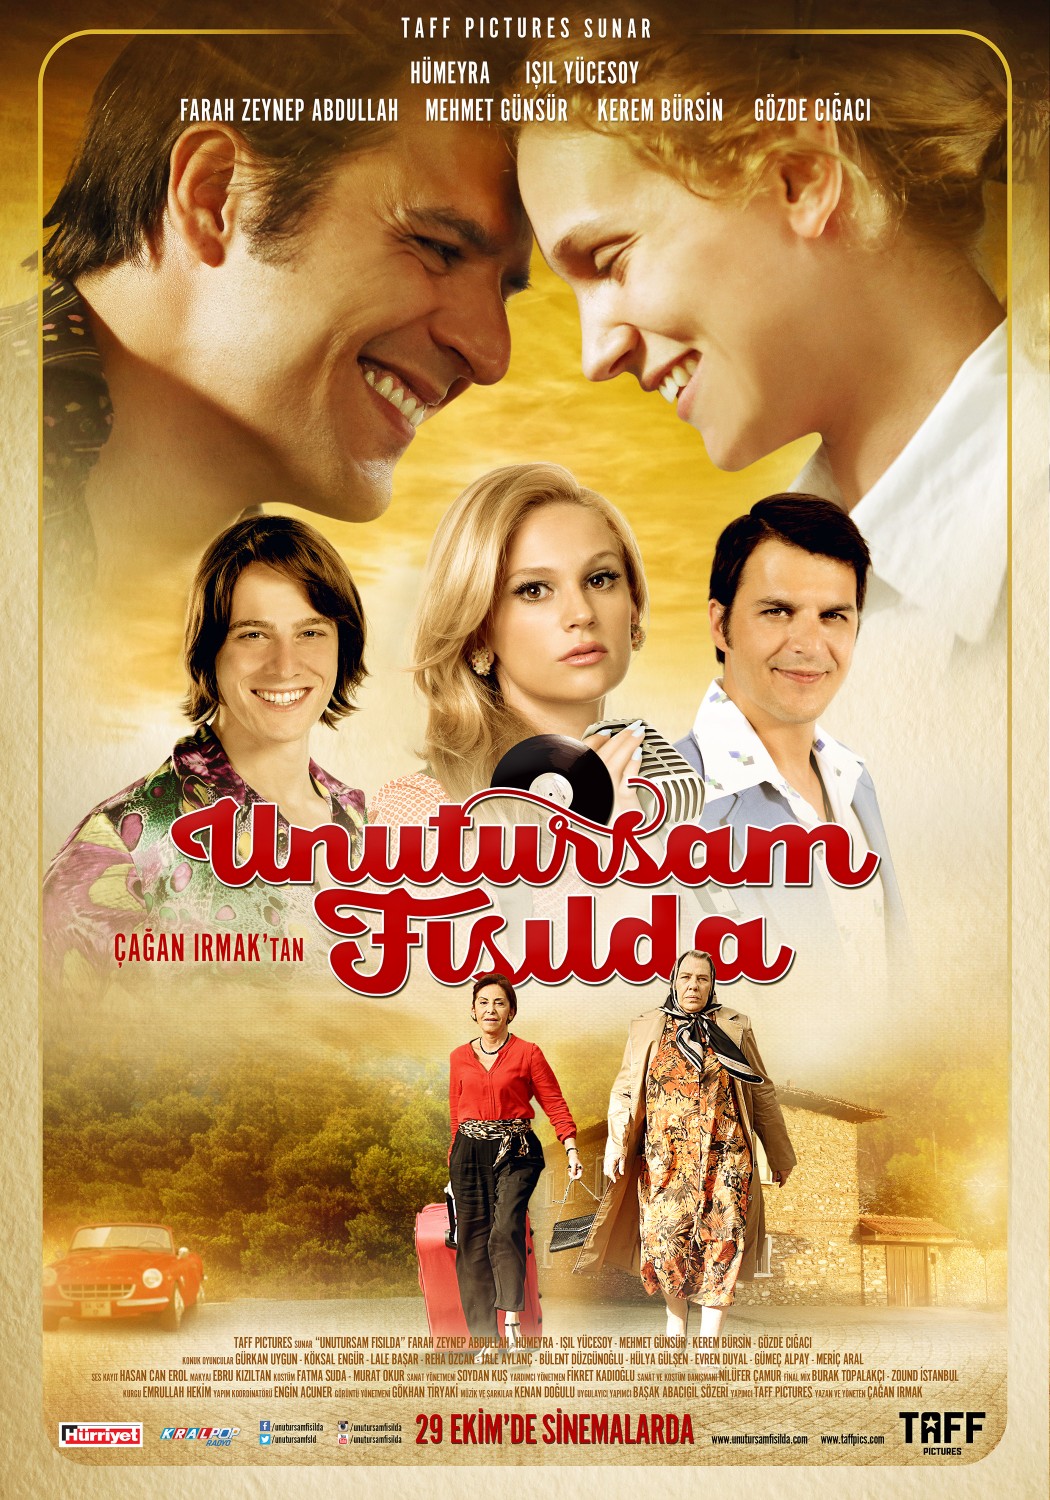 Extra Large Movie Poster Image for Unutursam Fisilda 